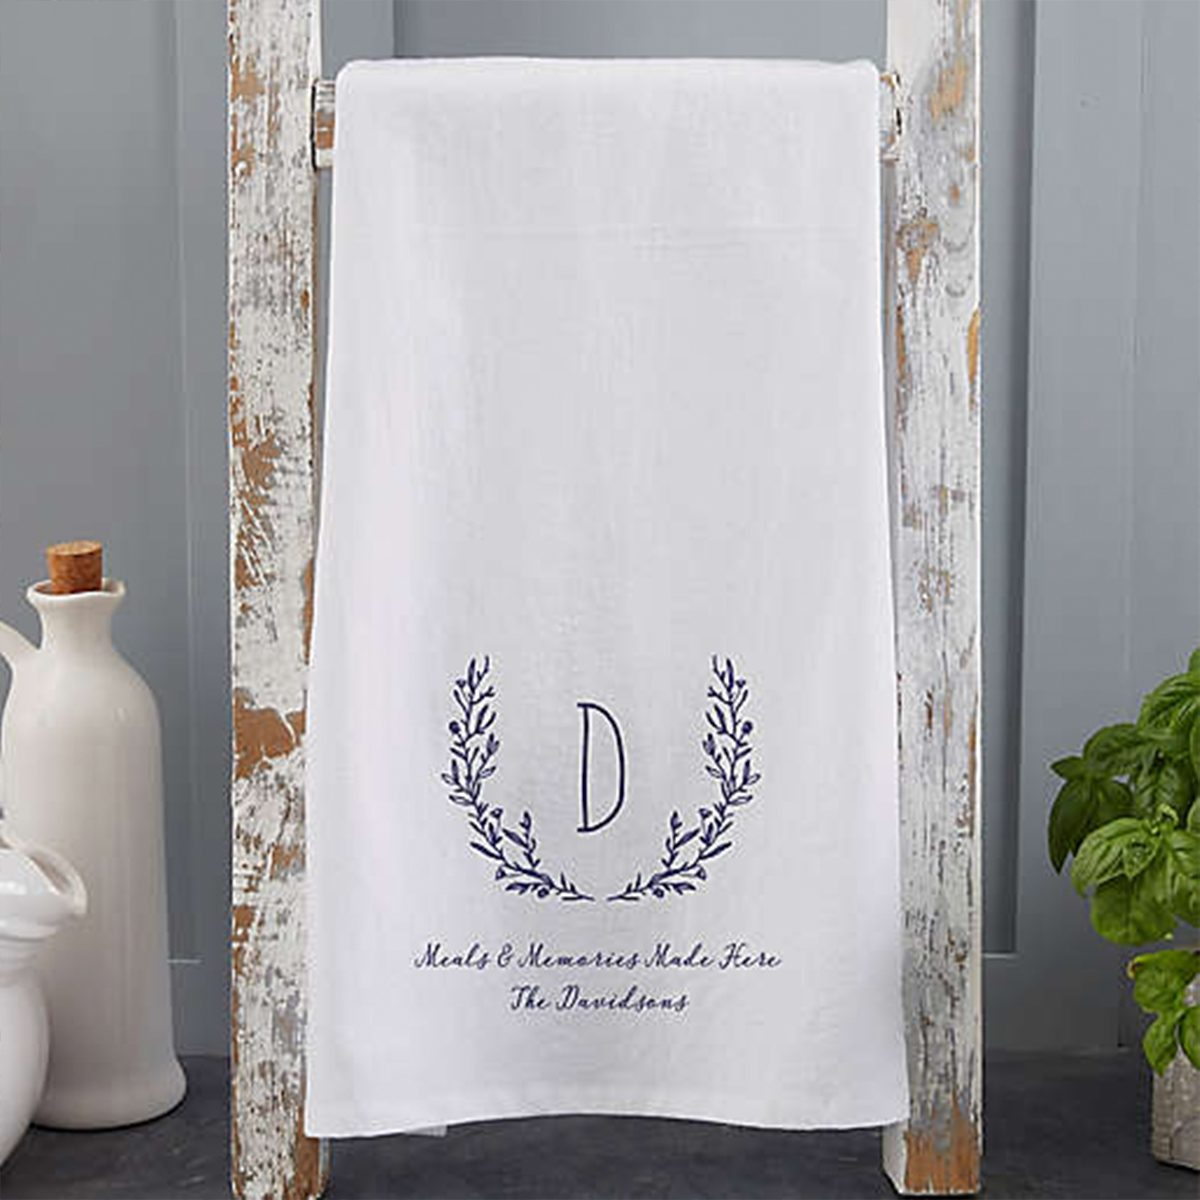 Set Of 3 Farmhouse Memories Tea Towels